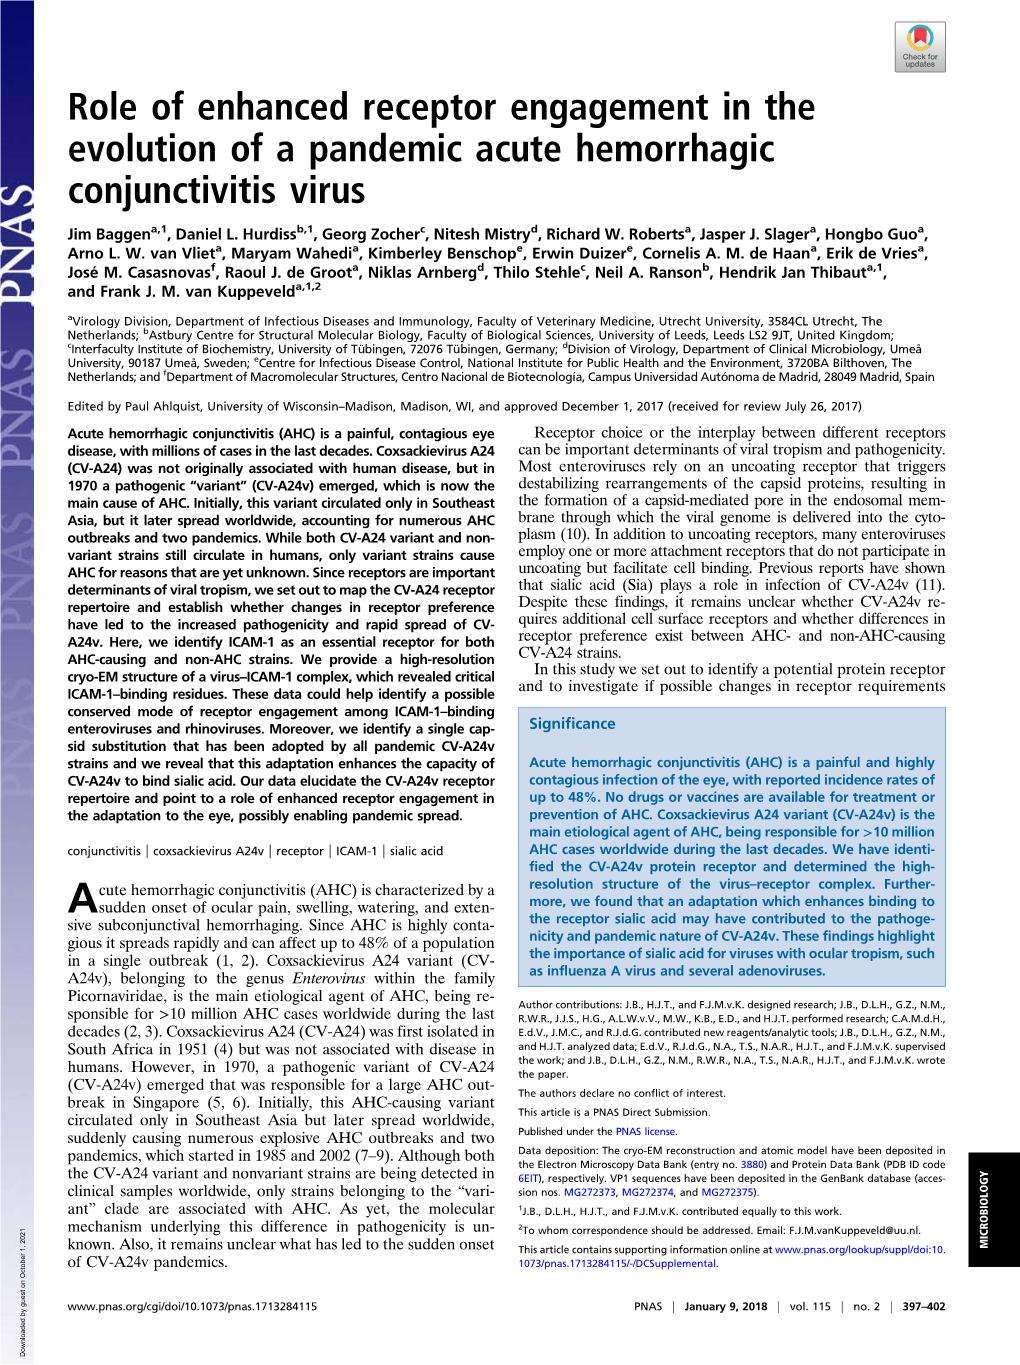 Role of Enhanced Receptor Engagement in the Evolution of a Pandemic Acute Hemorrhagic Conjunctivitis Virus